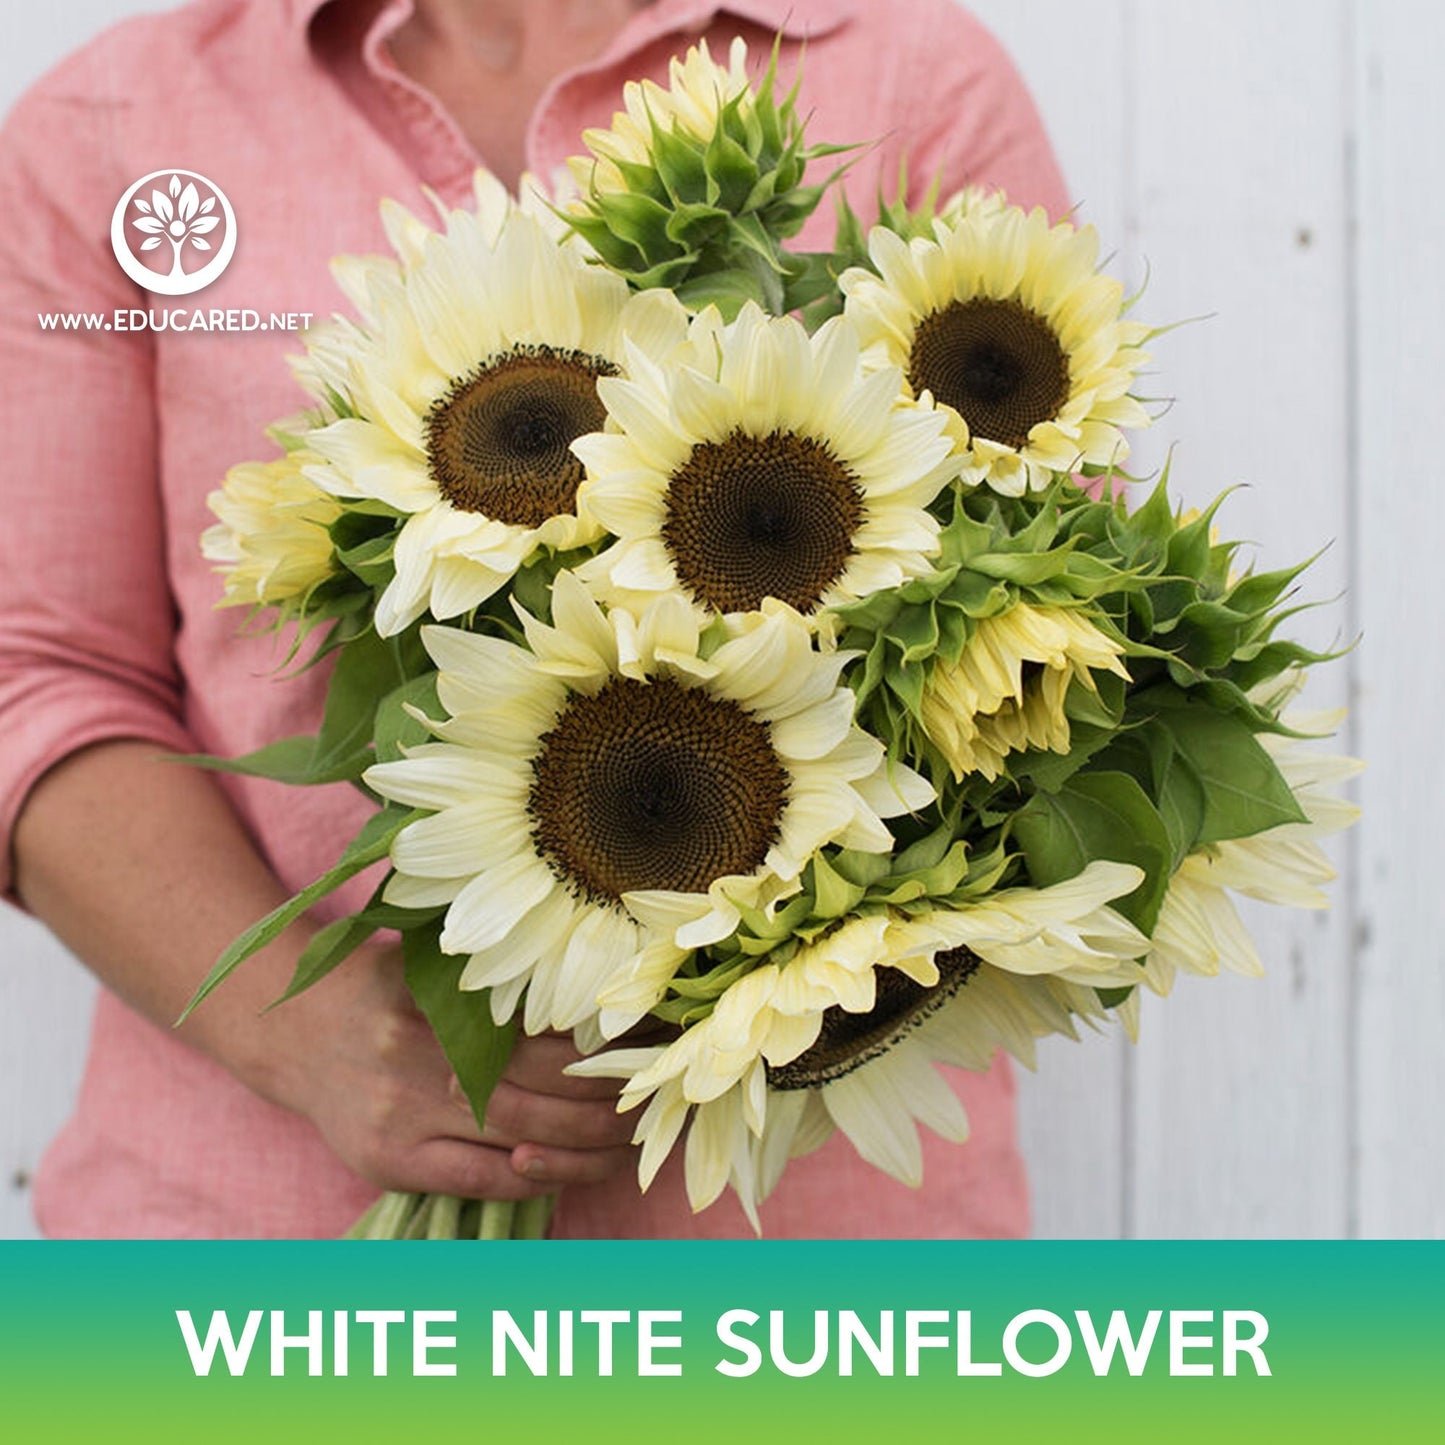 Procut White Nite Sunflower Seeds